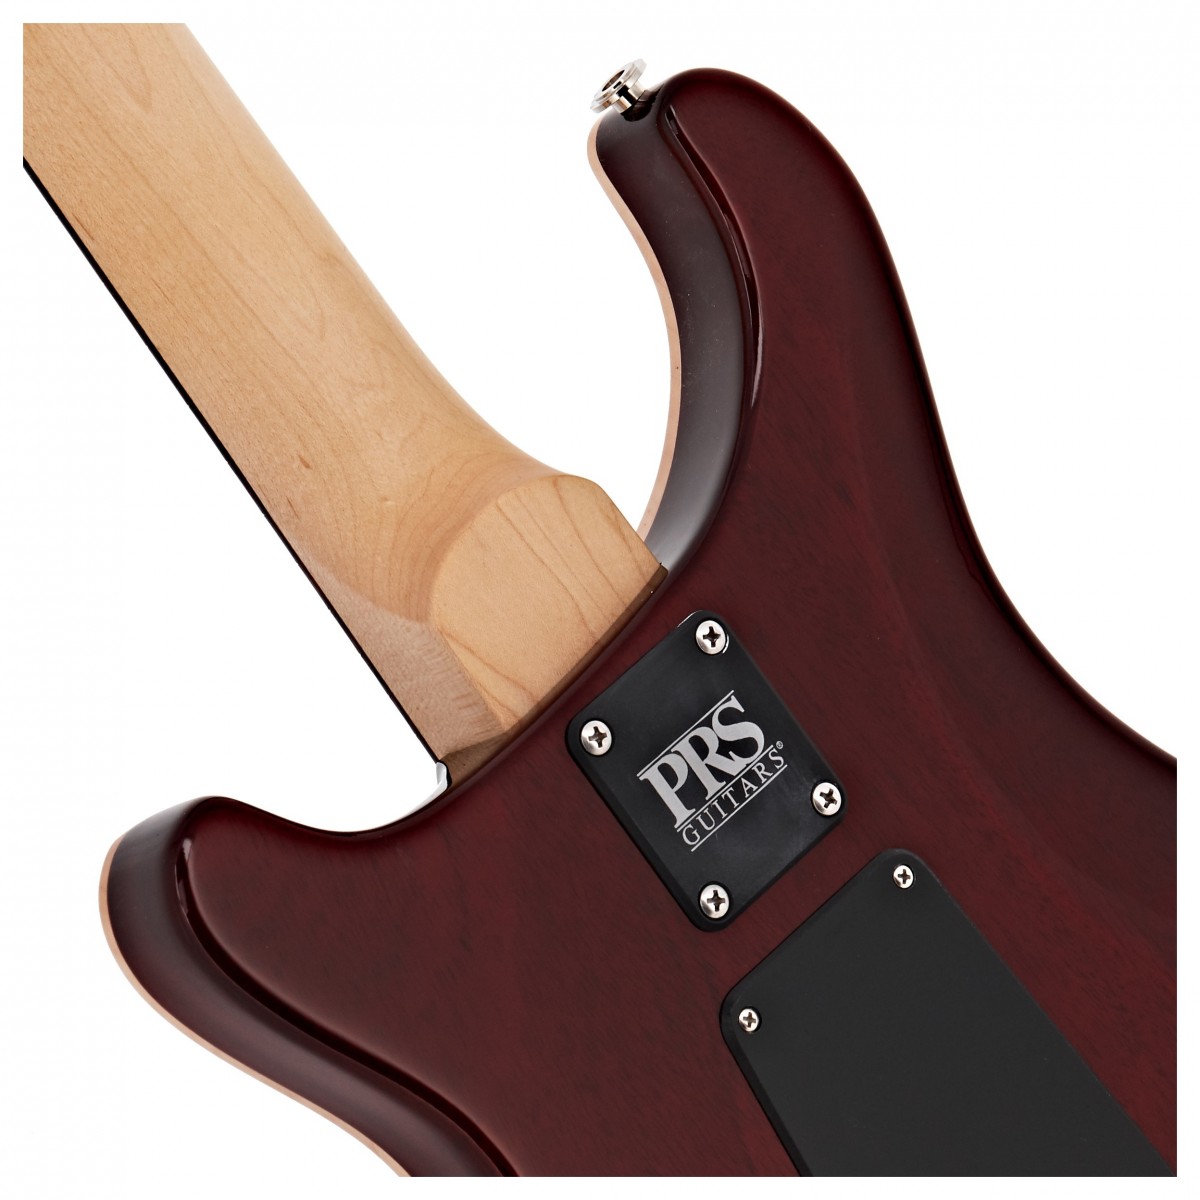 Prs Ce 24 Bolt-on Usa Hh Trem Rw - Fire Red Burst - Guitarra eléctrica de doble corte. - Variation 4